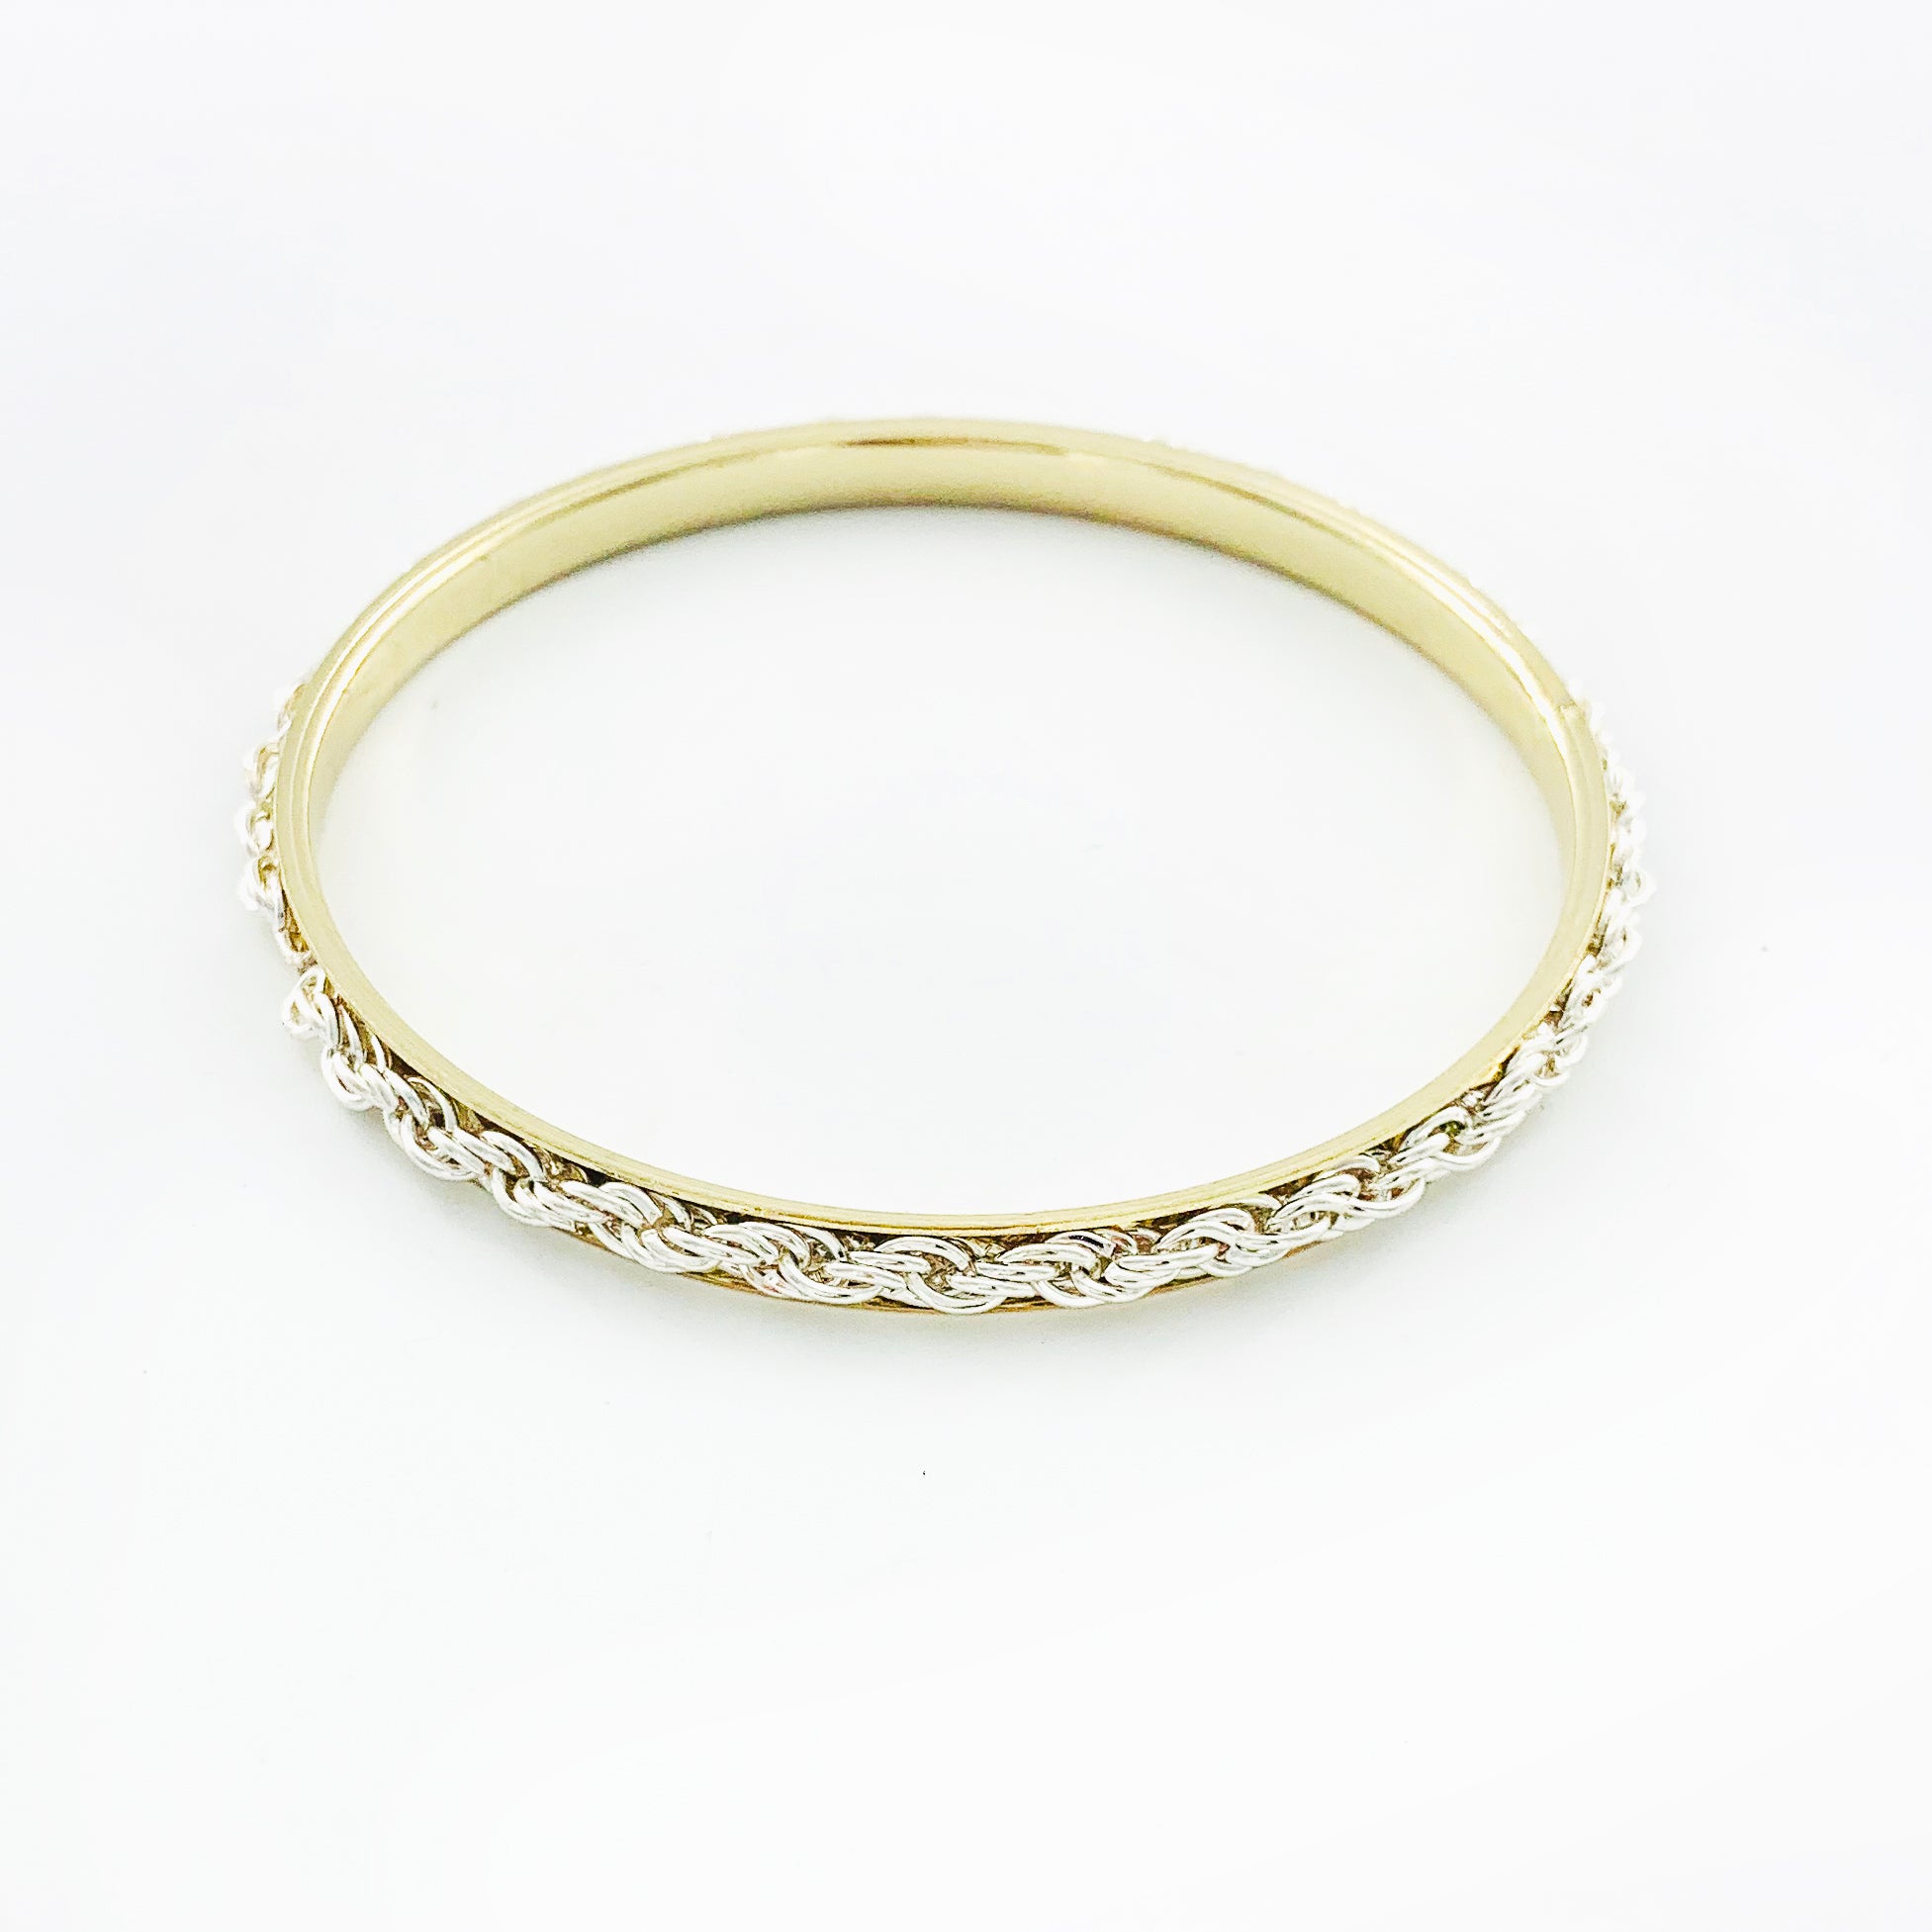 Silver braided chain on thin gold bangle